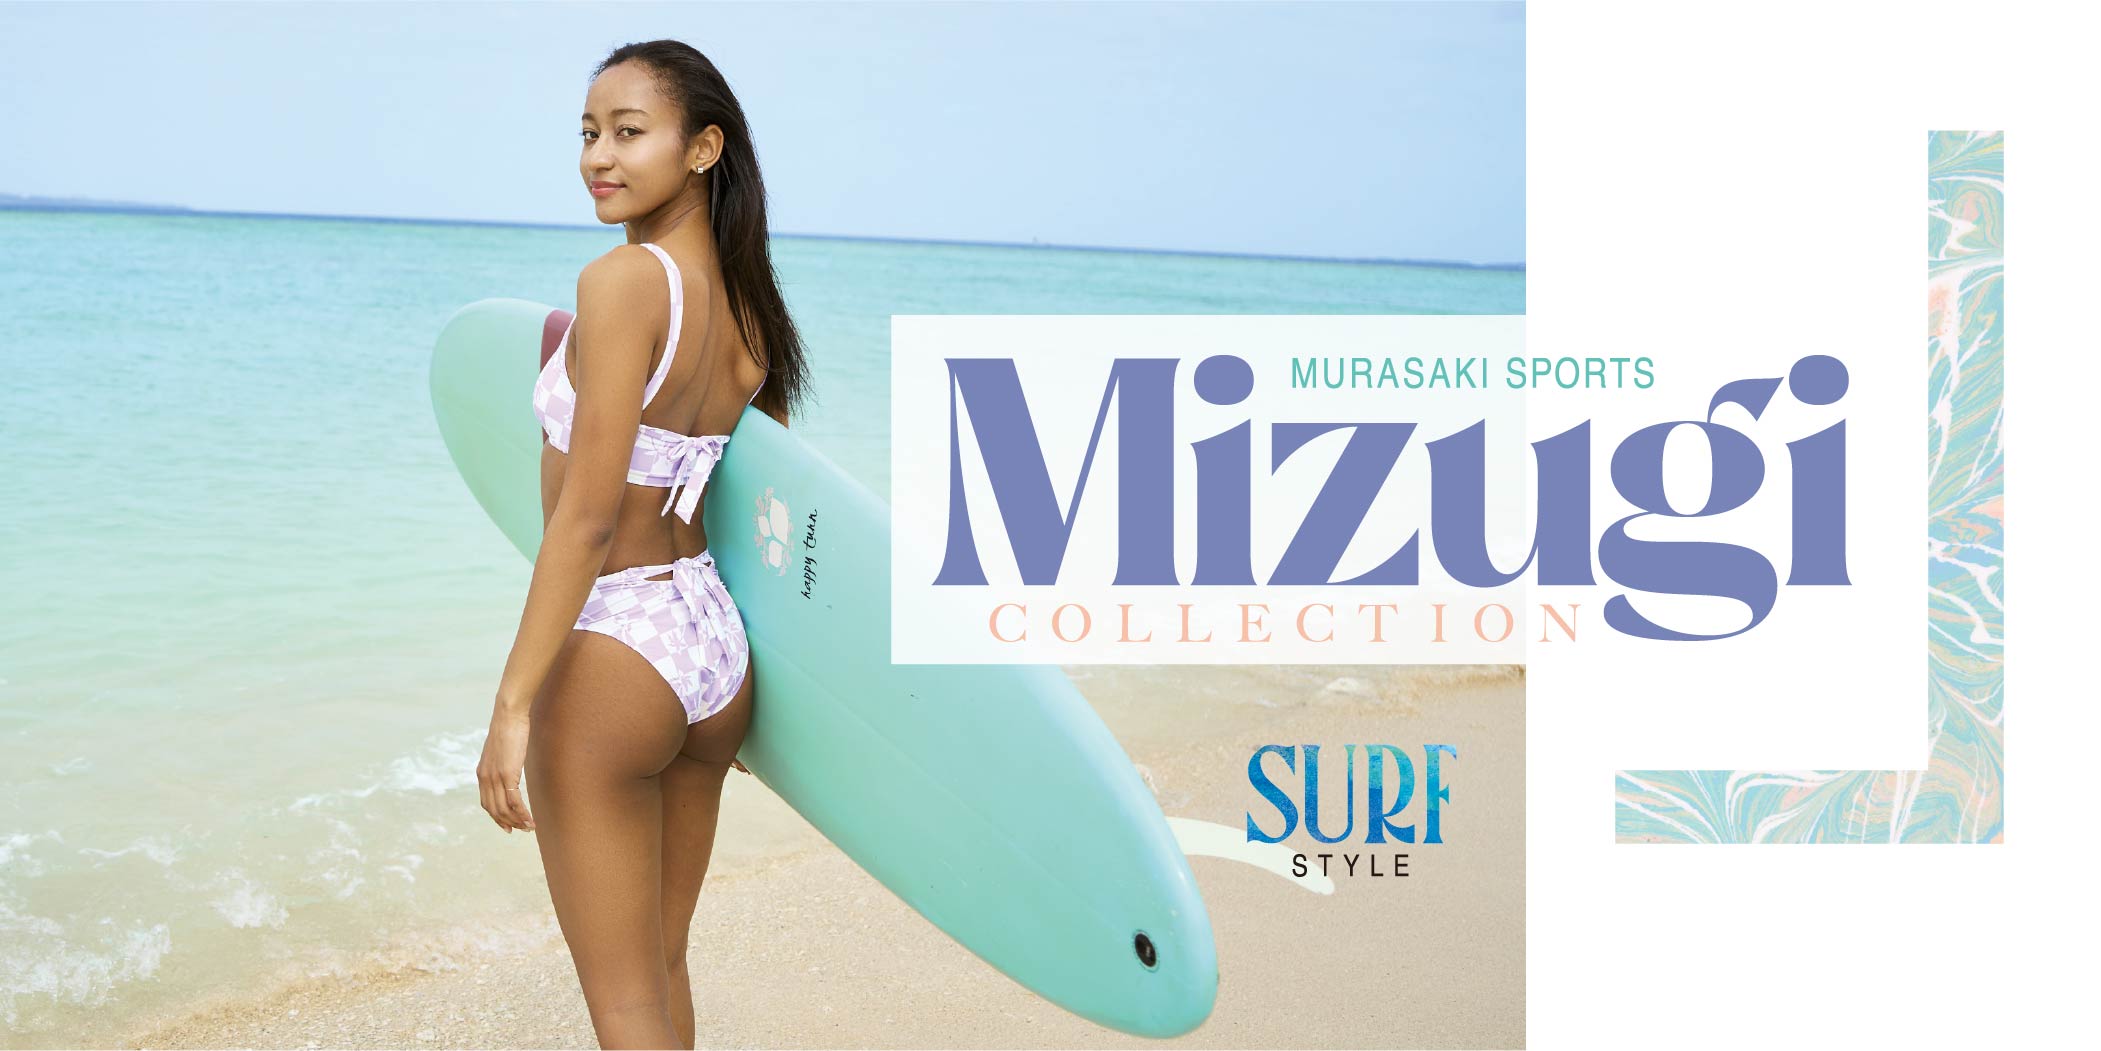 Murasakisuprts Mizugicollection surf